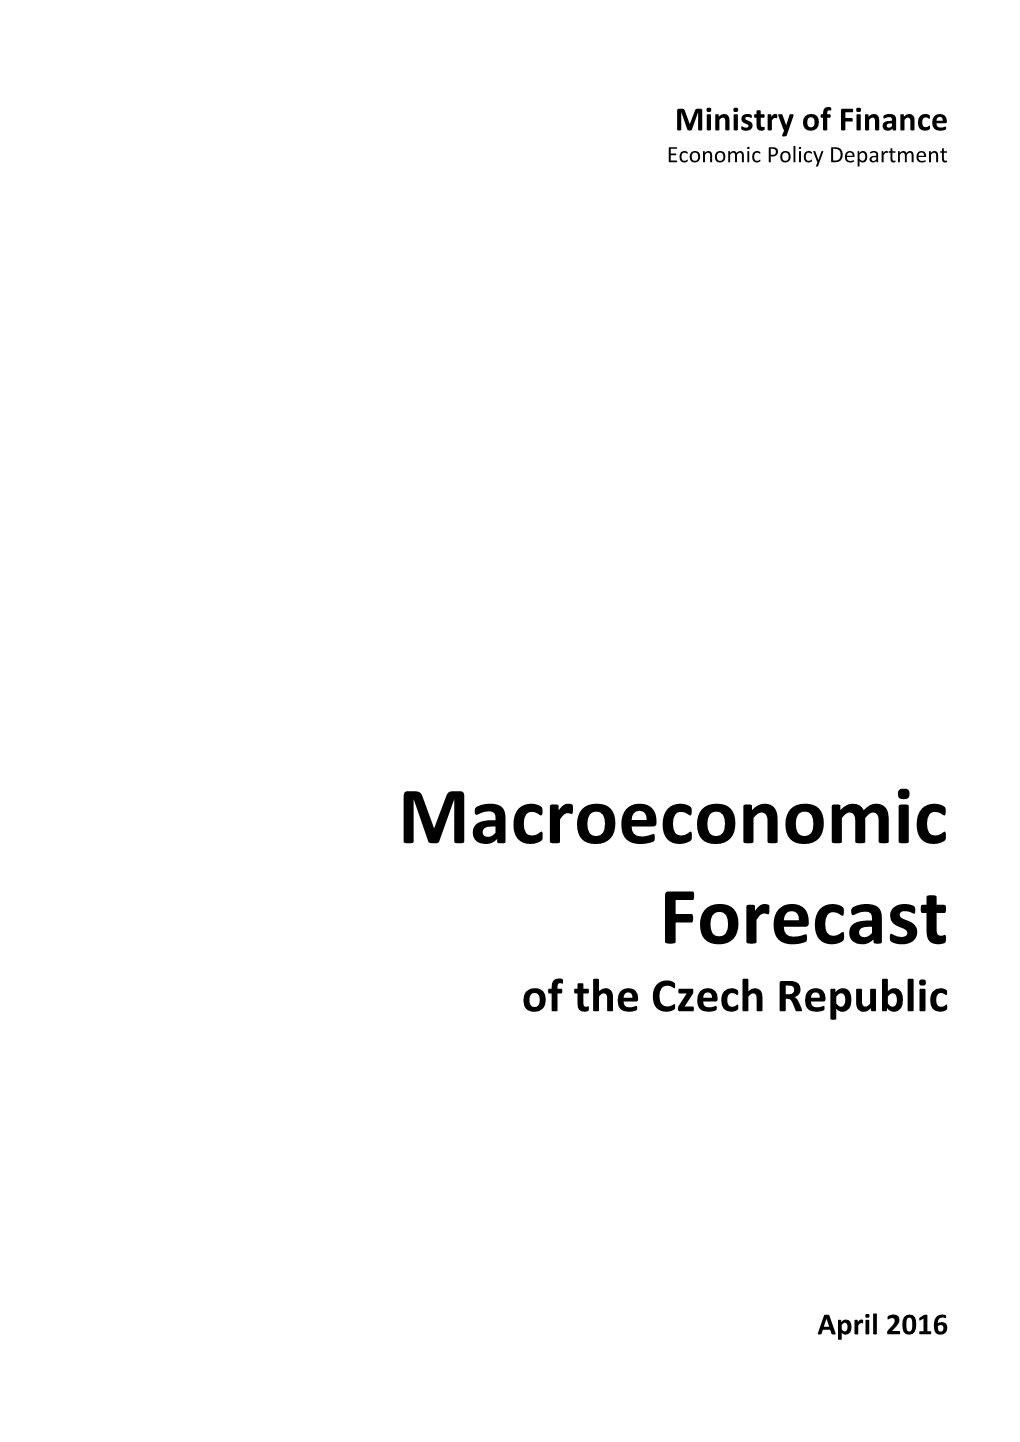 Macroeconomic Forecast of the Czech Republic